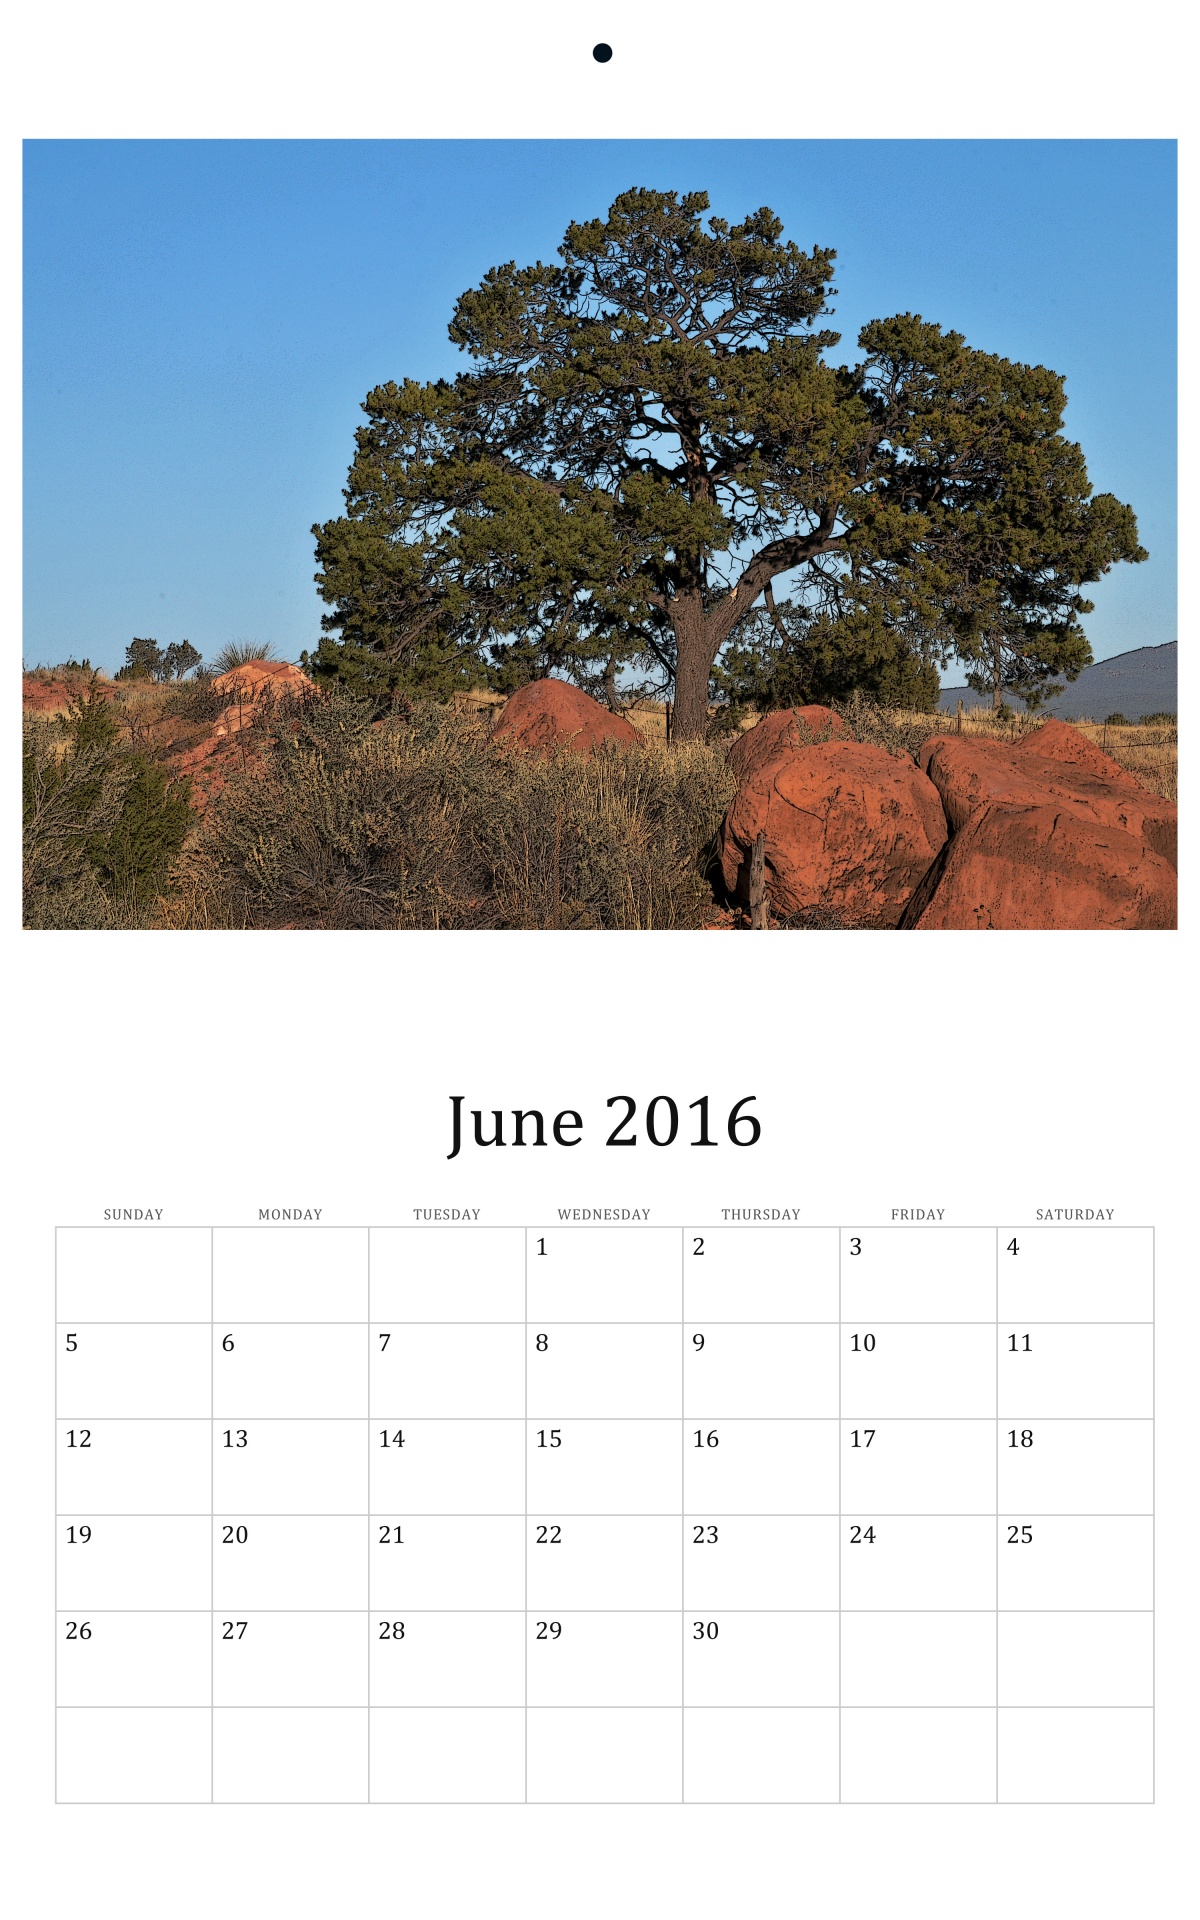 2016 2016 calendar june free photo